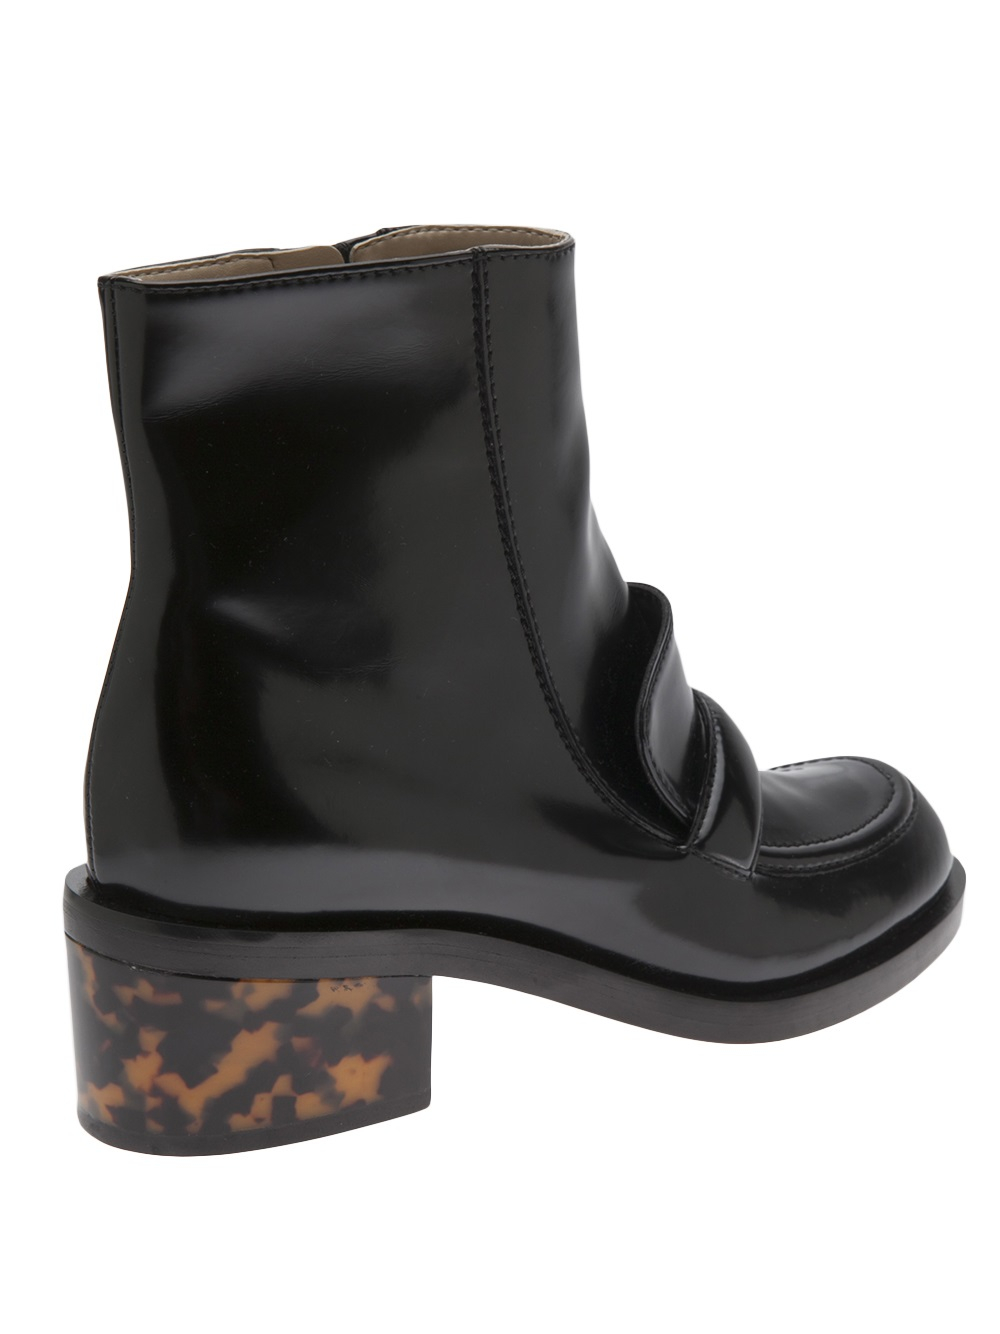 stella mccartney tortoiseshell boots